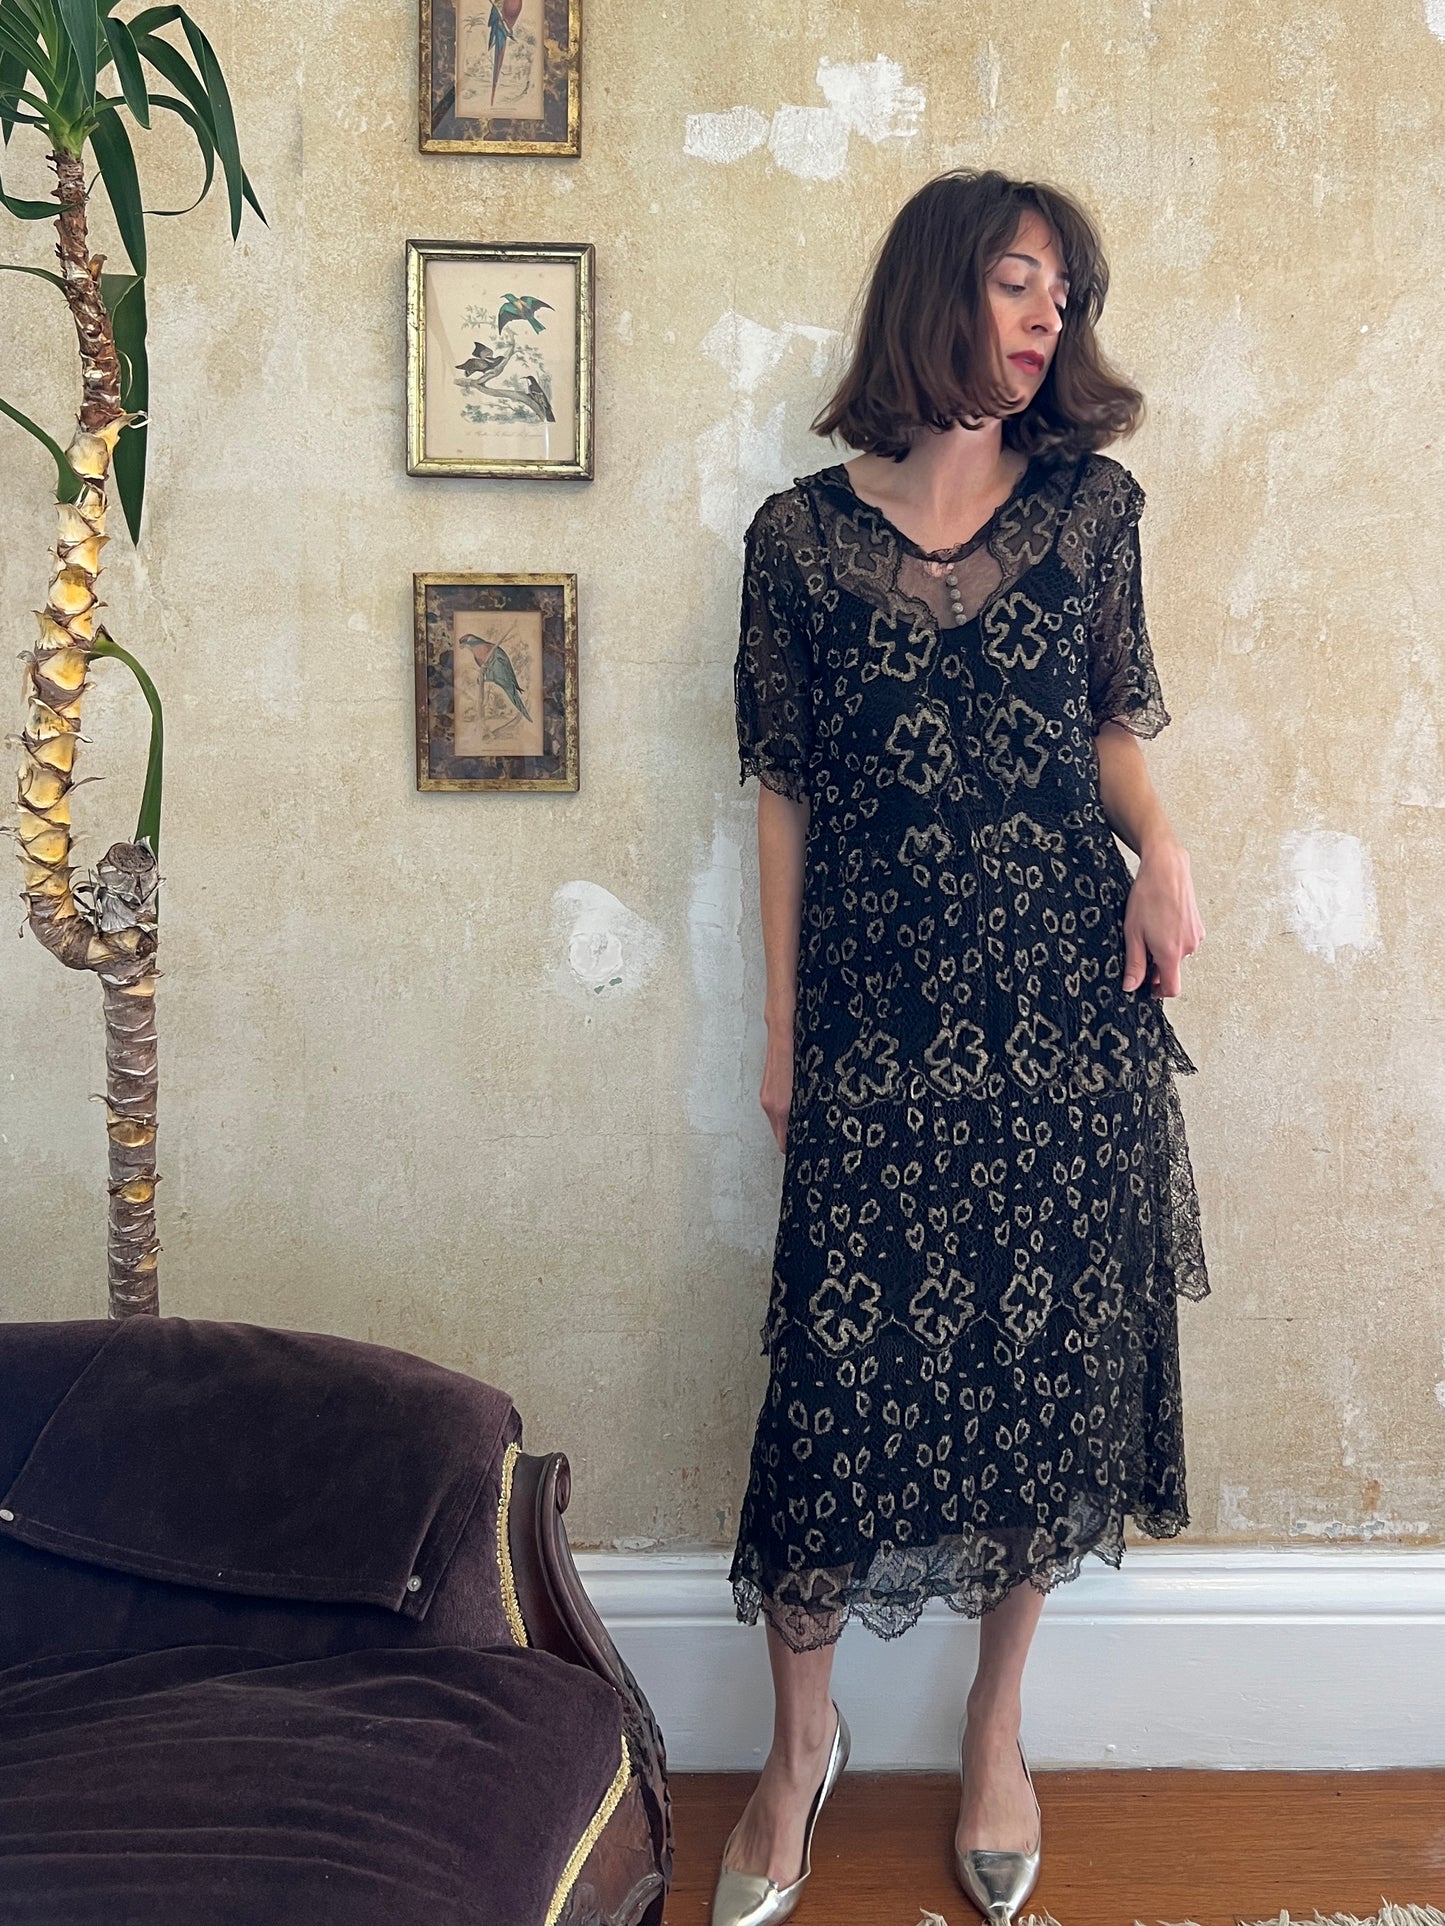 1920s Art Deco Metallic Thread Tiered Dress S/M